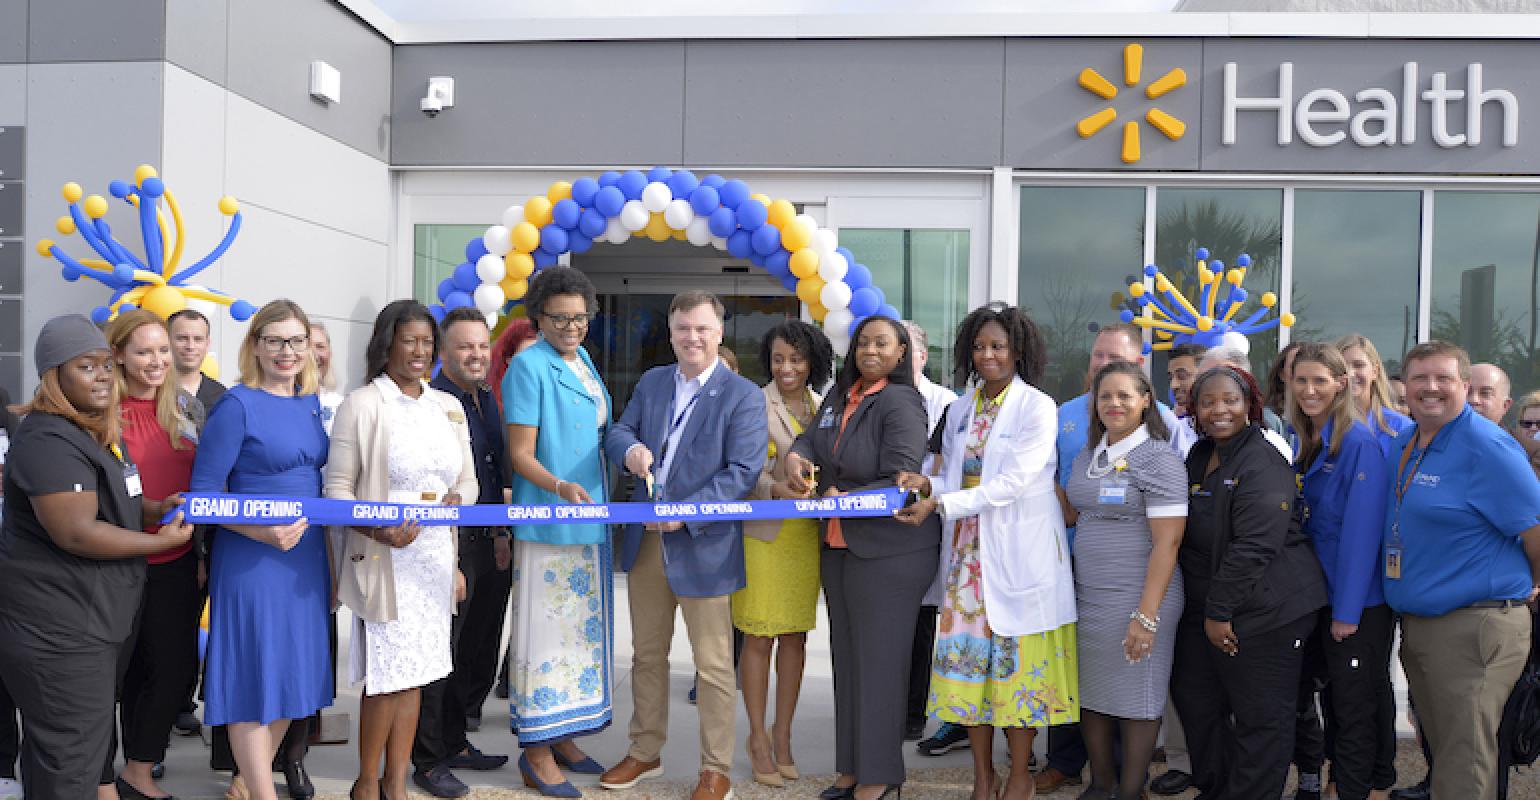 Walmart begins Health Center rollout in Florida Supermarket News